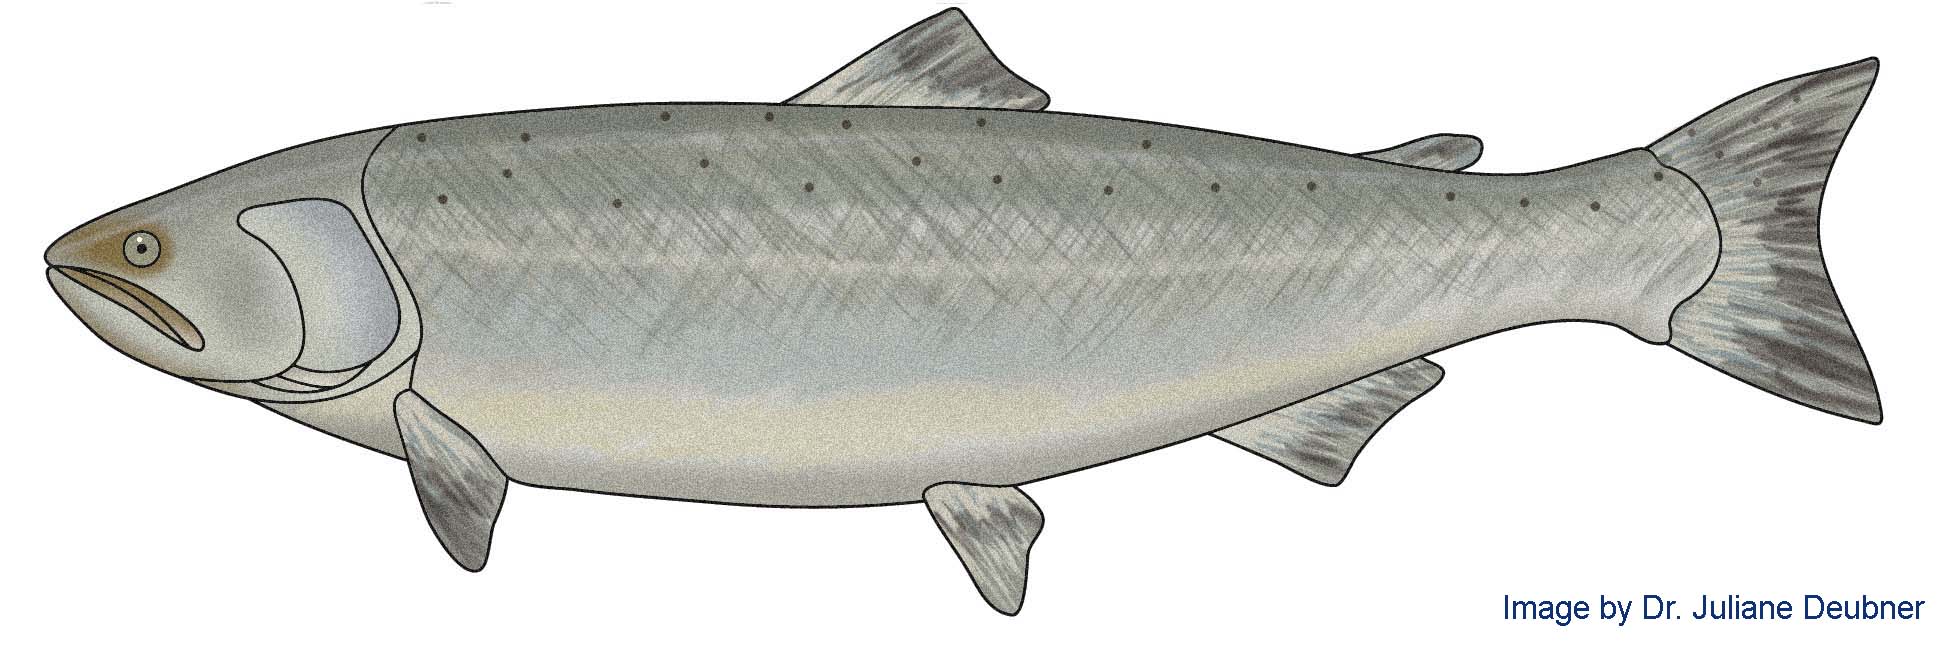 coho-salmon-2021.jpg